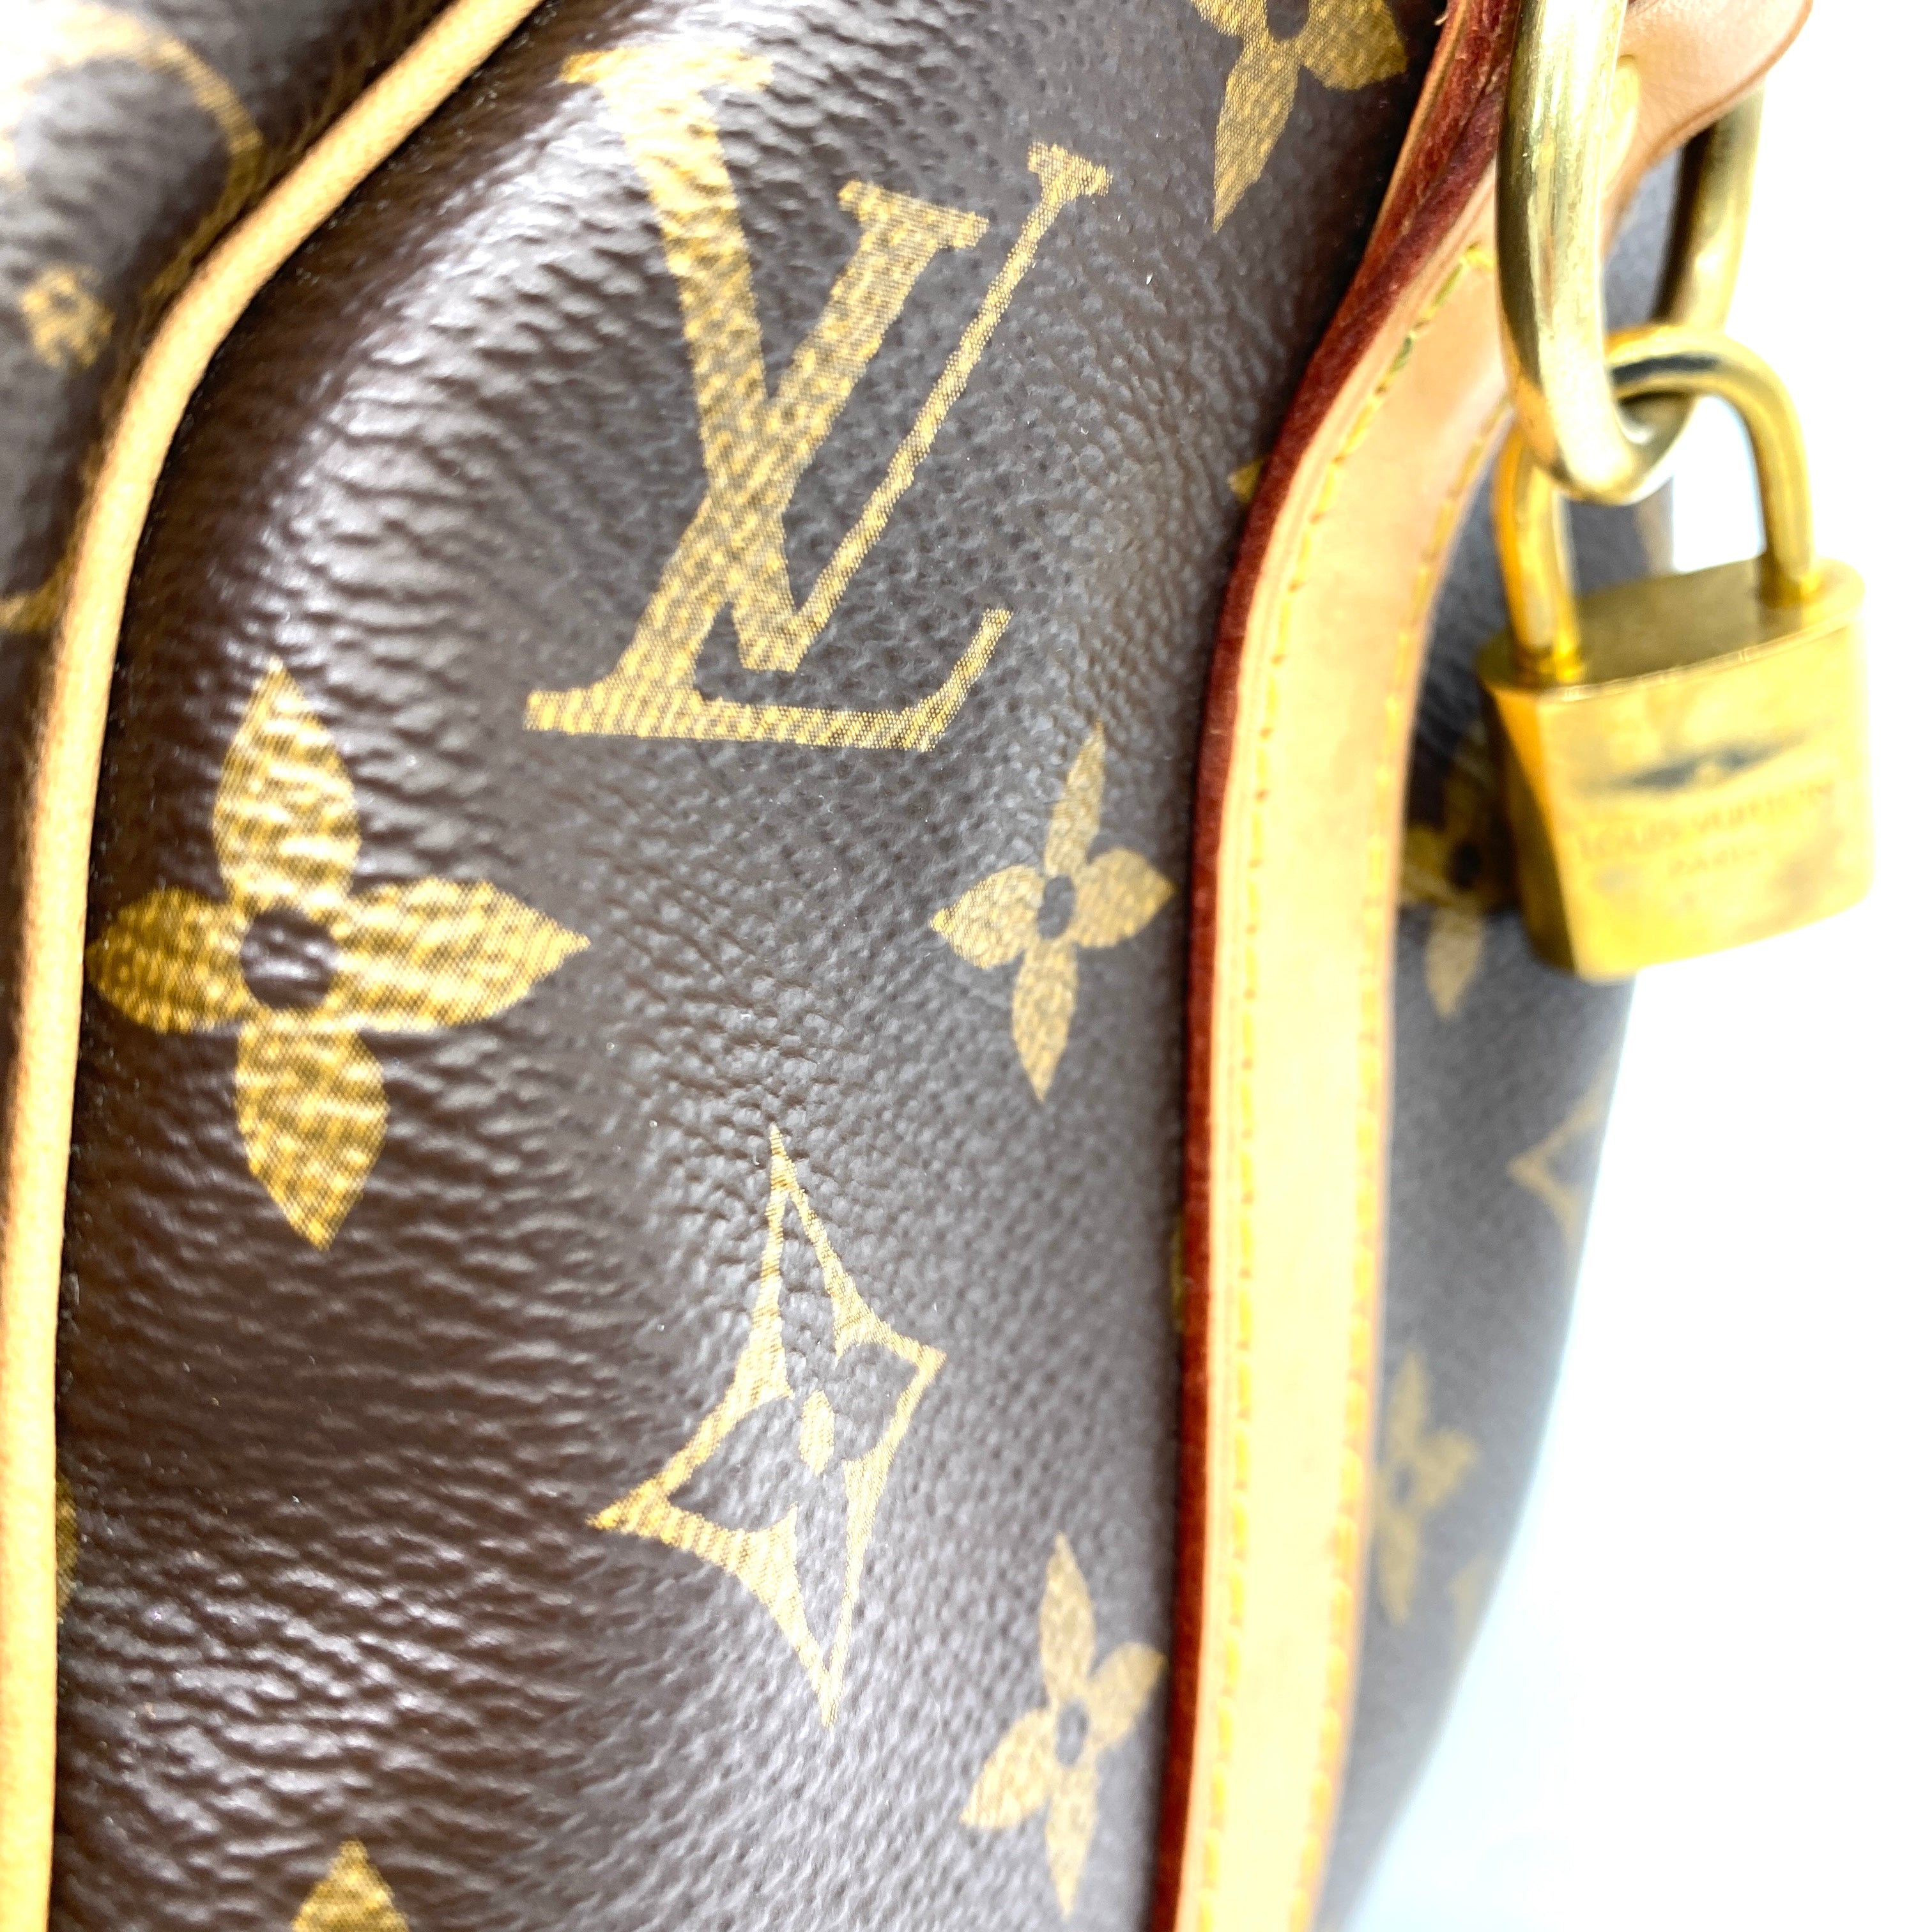 Bolsa Louis Vuitton Speedy 25